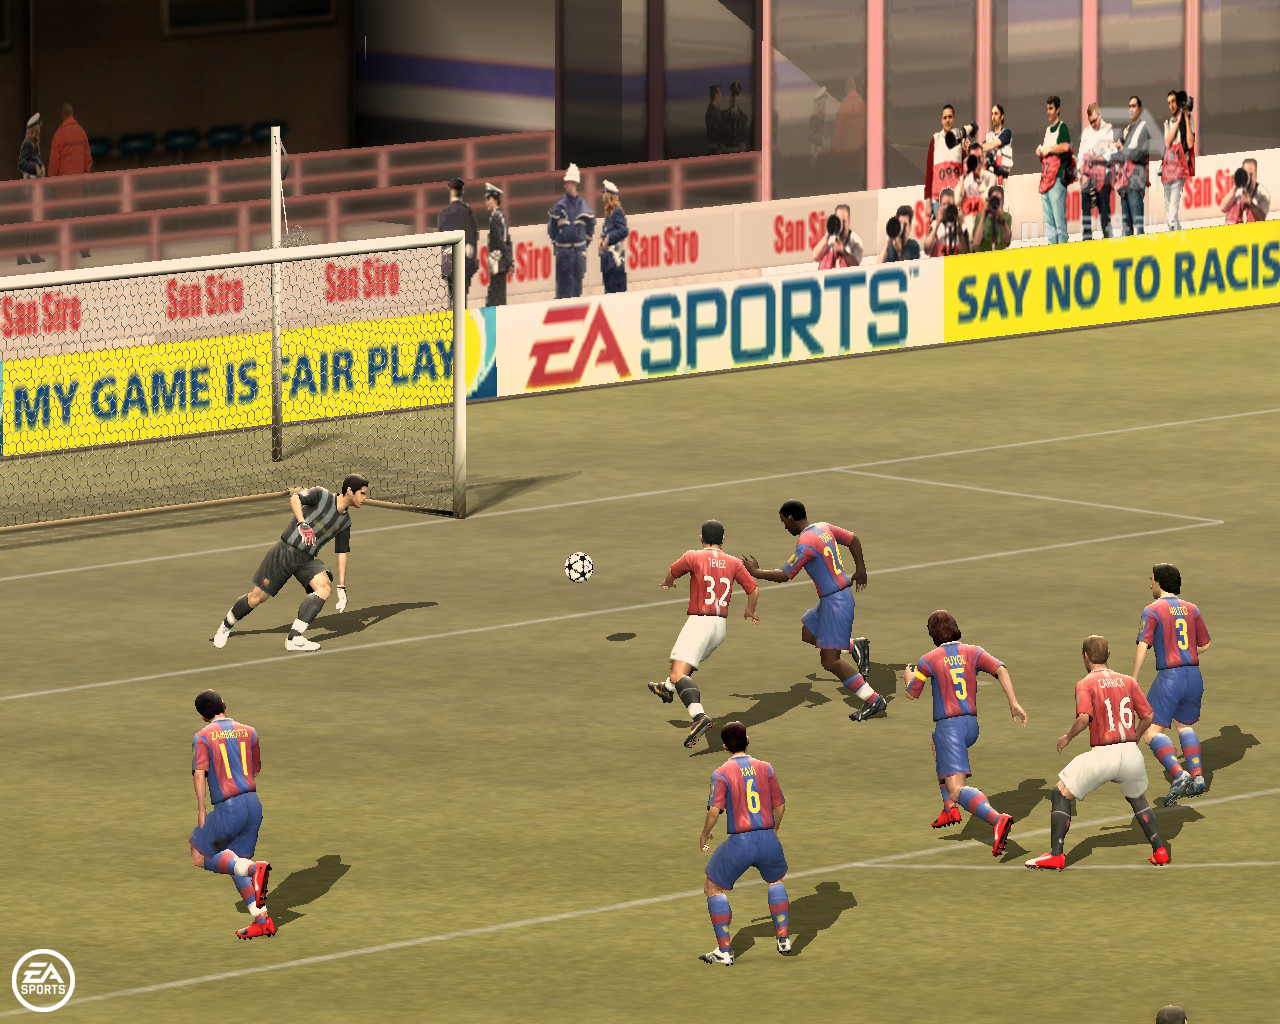 Free Online Games: Free Online Games - FIFA Online 2 HD – Play soccer